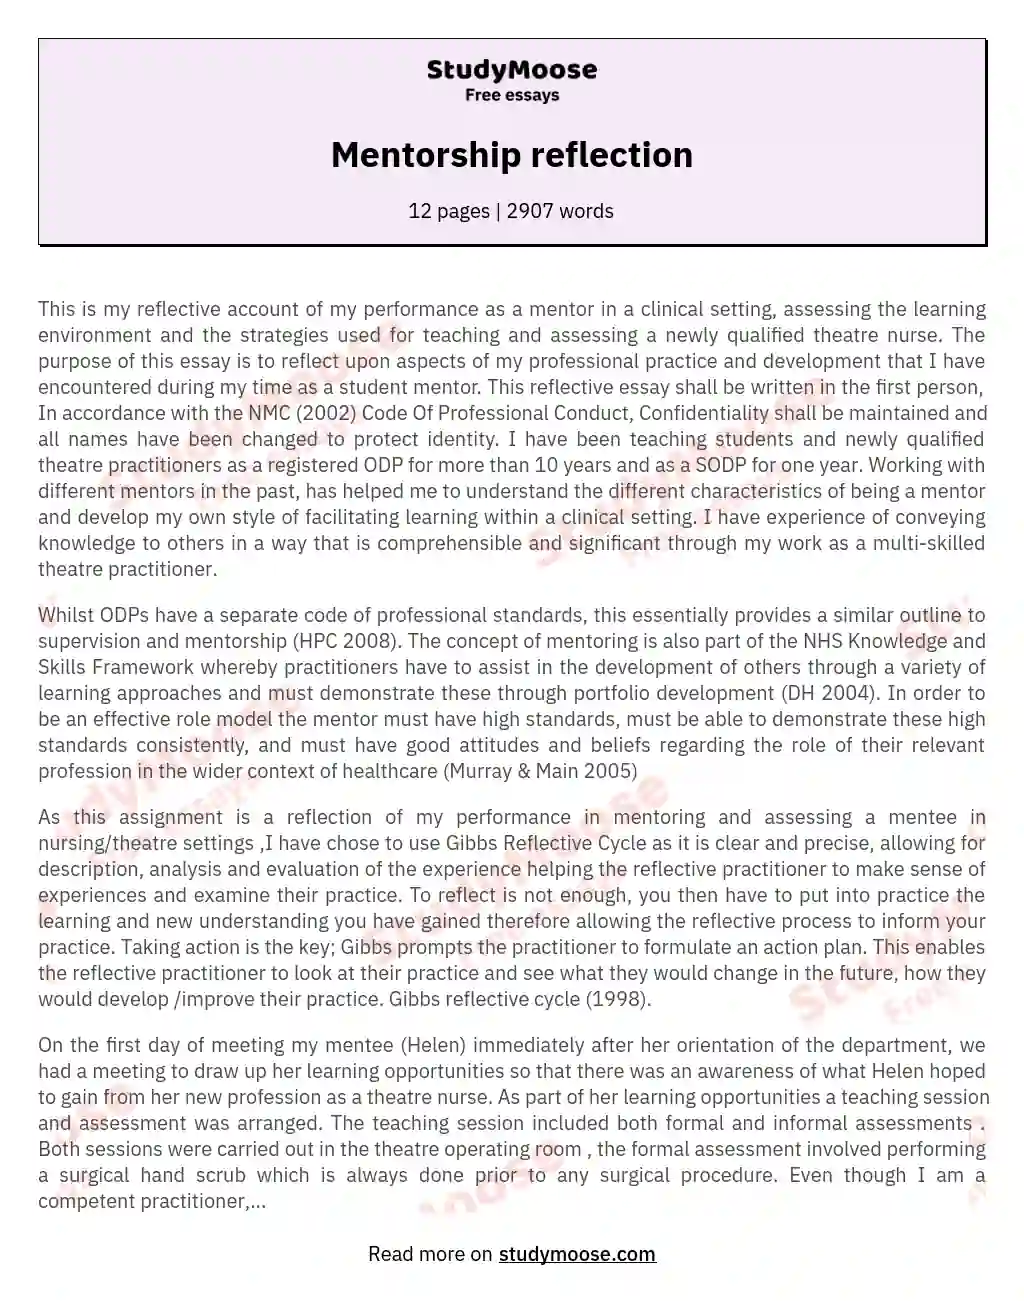 Mentorship reflection essay